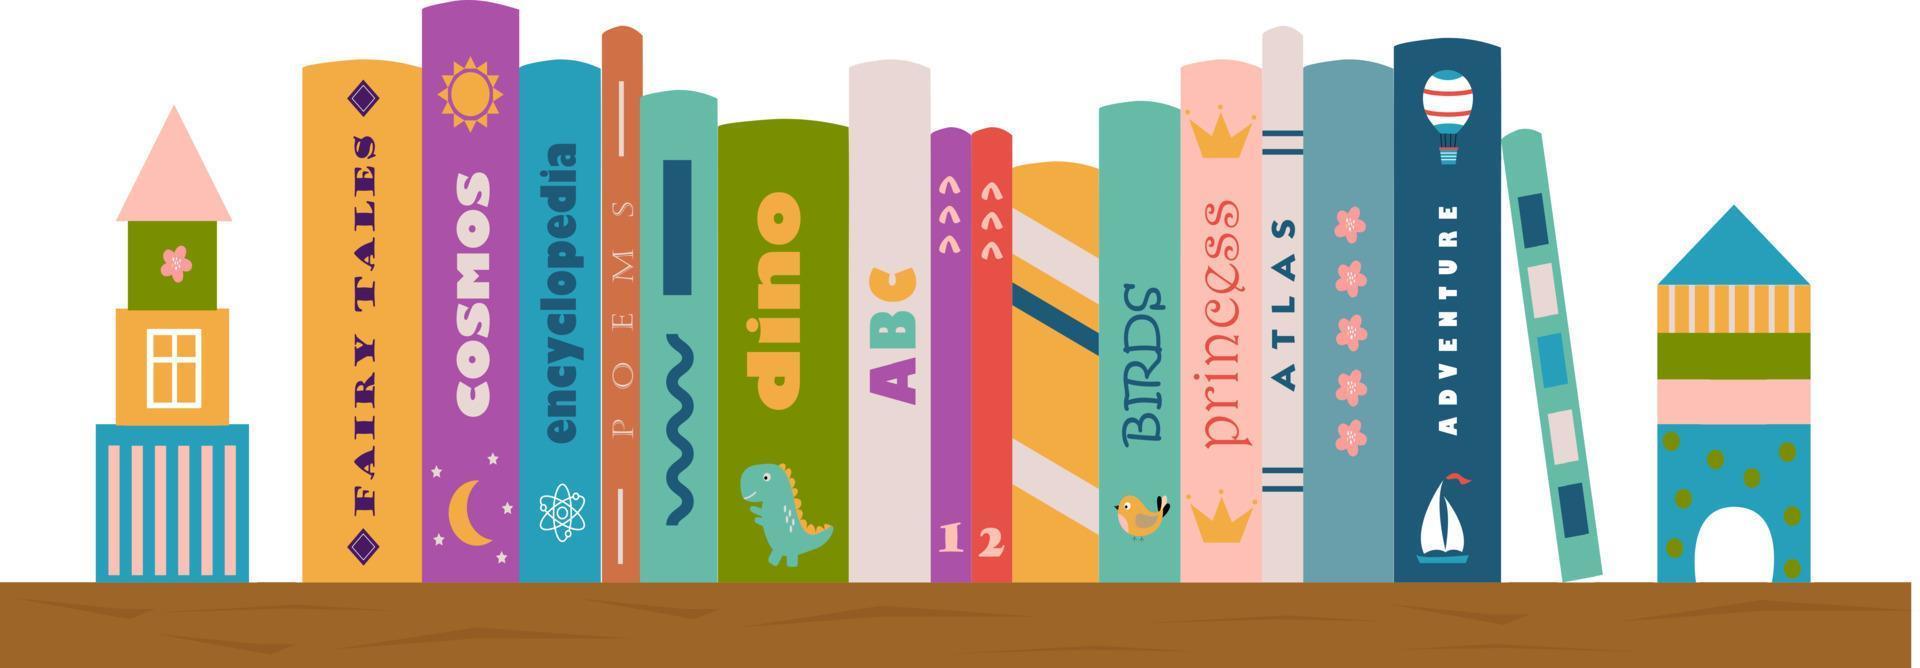 childrens books shelf vector